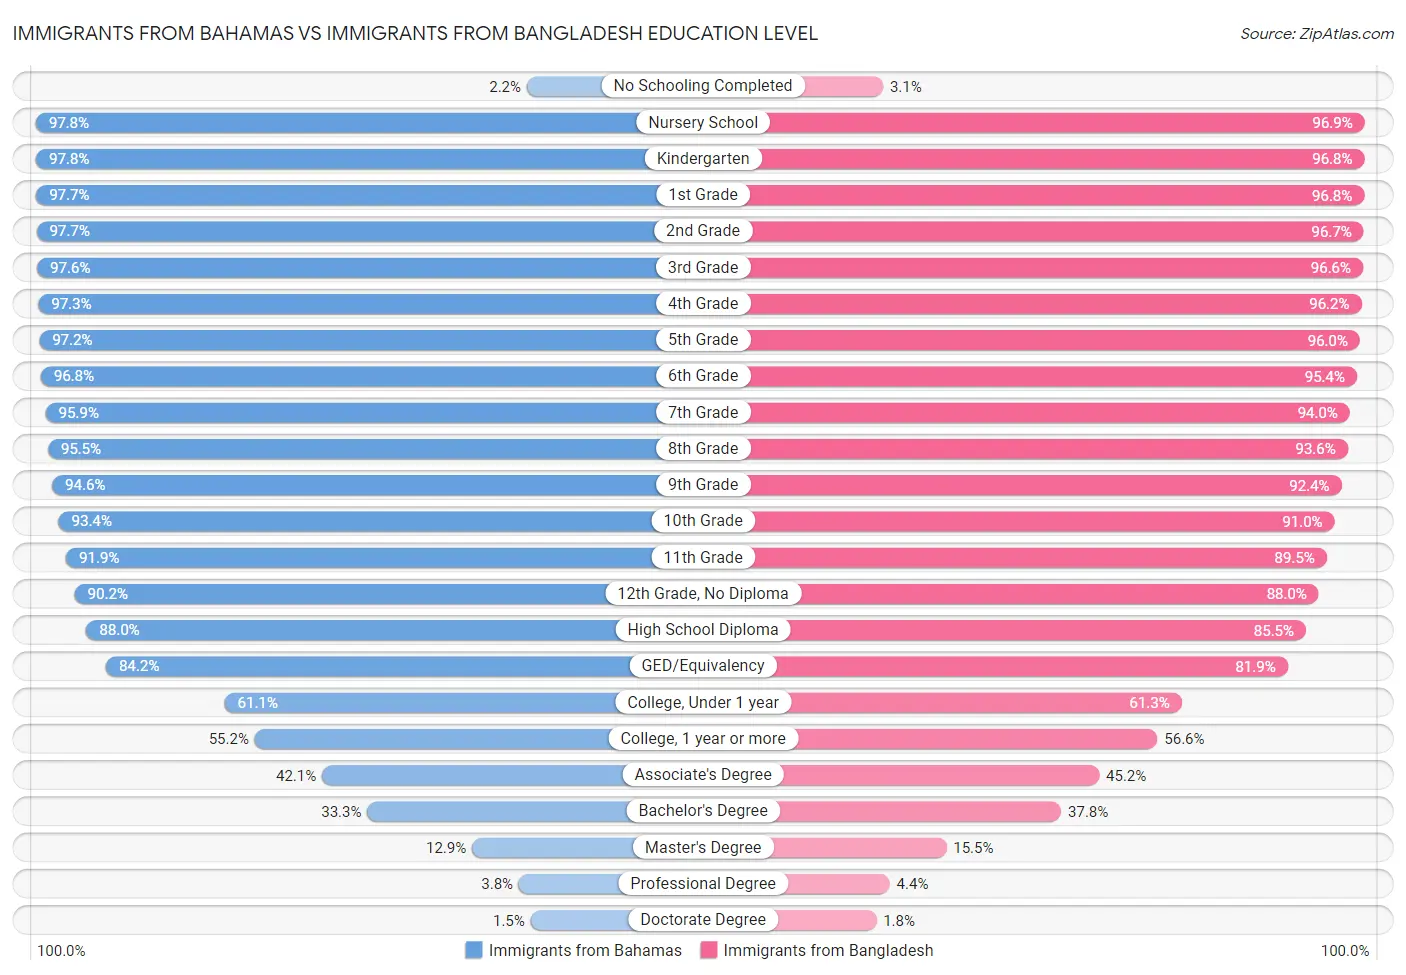 Immigrants from Bahamas vs Immigrants from Bangladesh Education Level